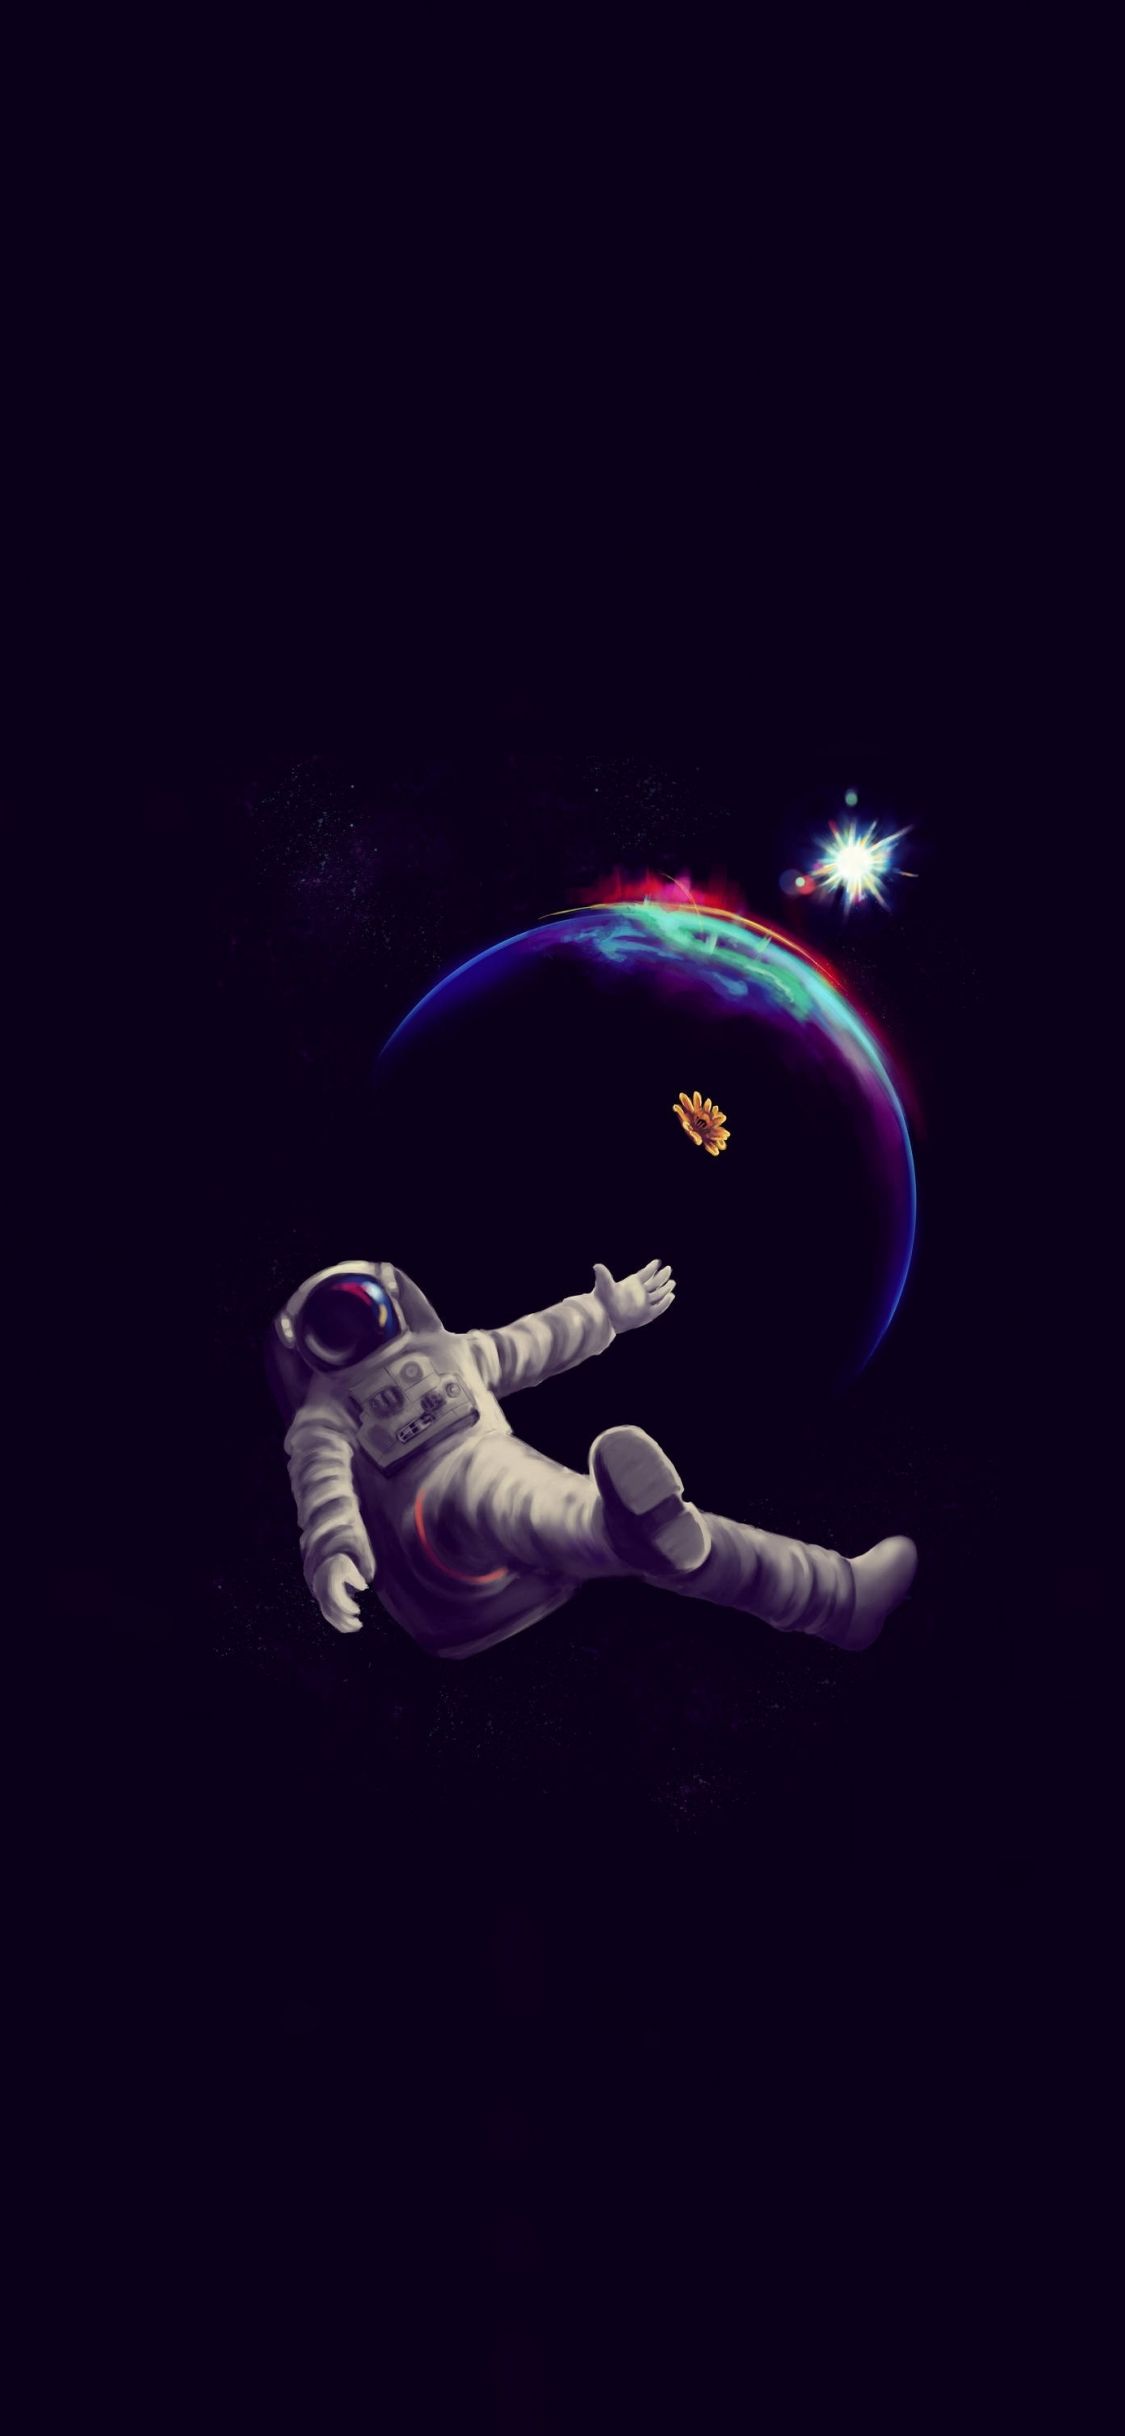 Download 1125x2436 wallpaper planet, astronaut, dark, minimal, iphone x 1125x2436 HD image, background, 17612